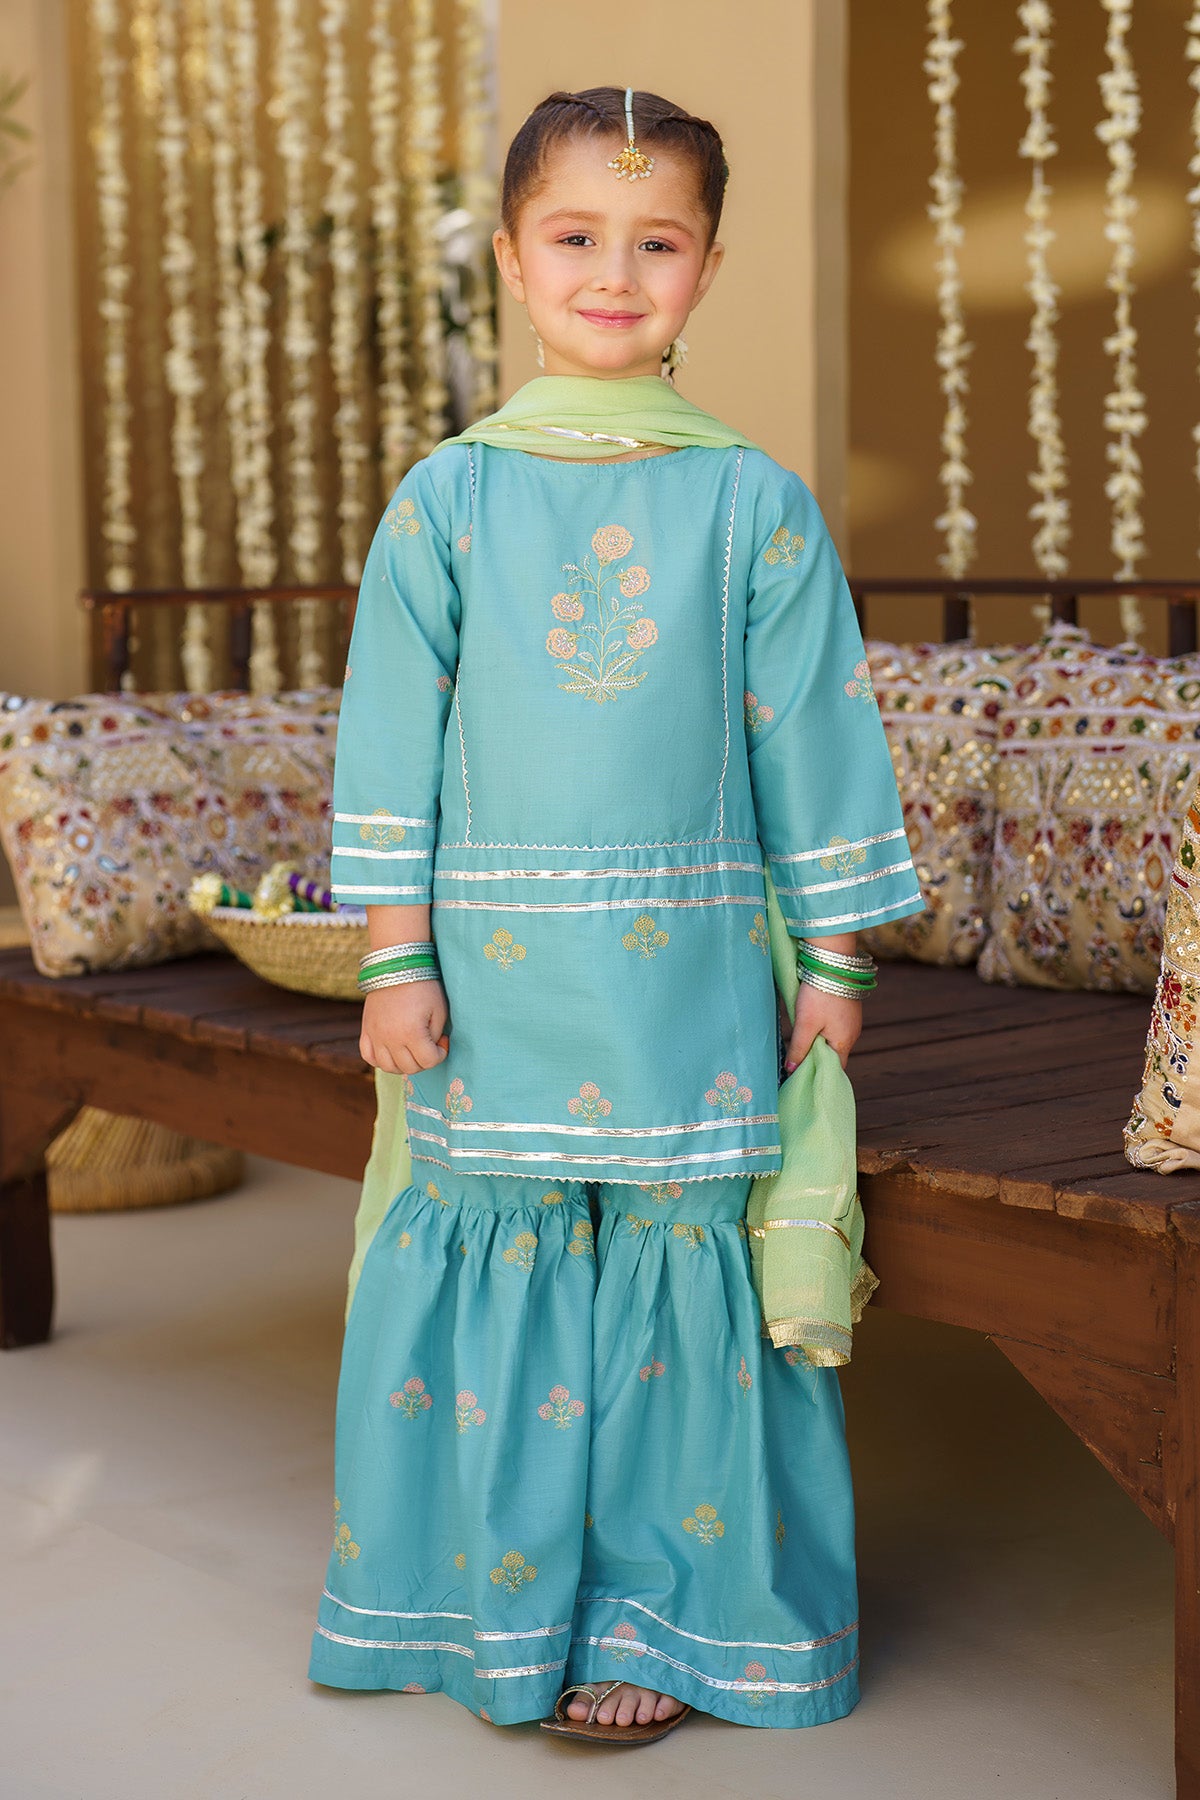 Kids boys Ethnic Indian Festive krishna kanha clothes for baby child | eBay